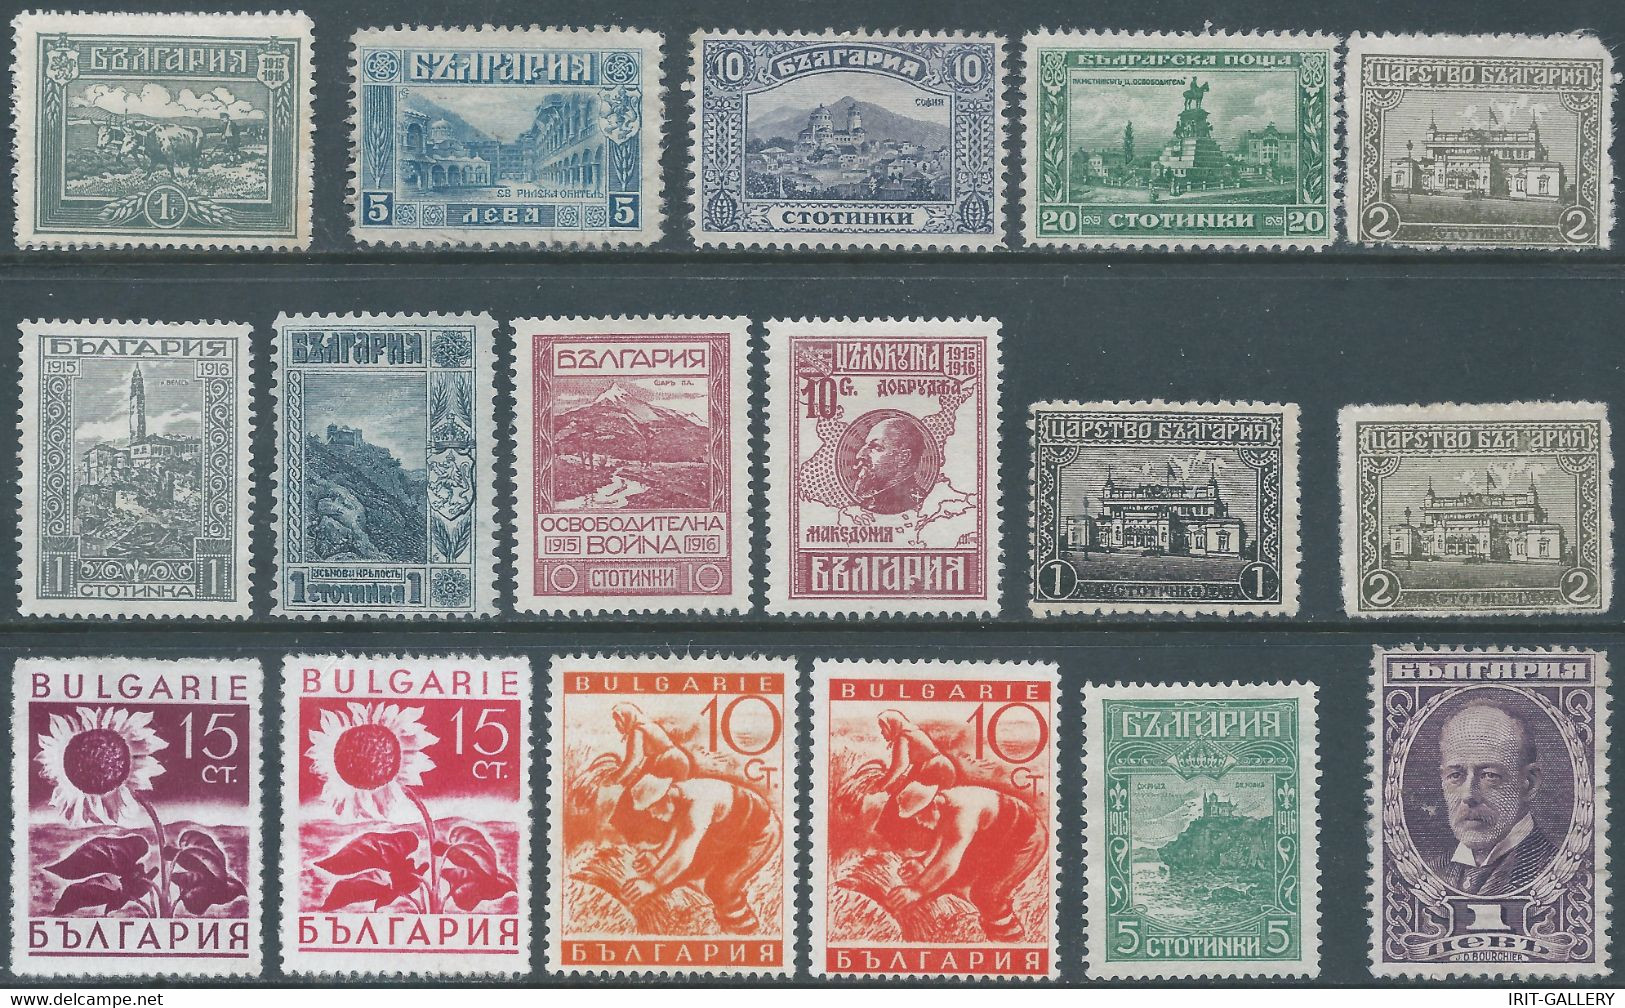 Bulgaria - Bulgarien - Bulgare,,Lot Mix 17 Stamps,Mint - Collections, Lots & Séries